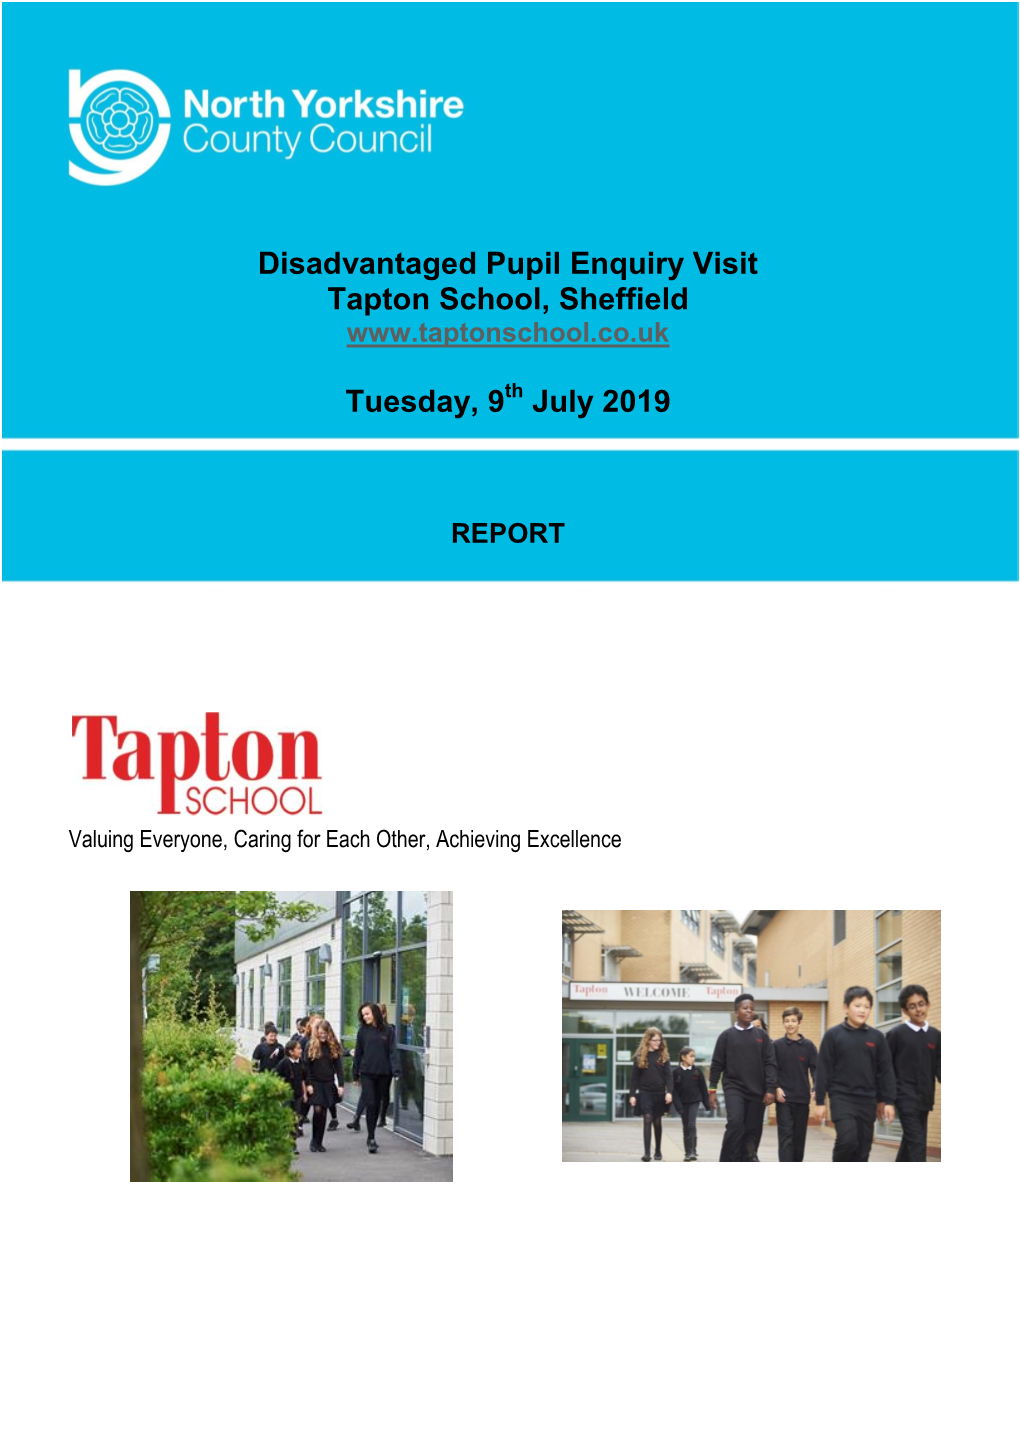 Disadvantaged Pupil Enquiry Visit to Tapton School, Sheffield July 2019